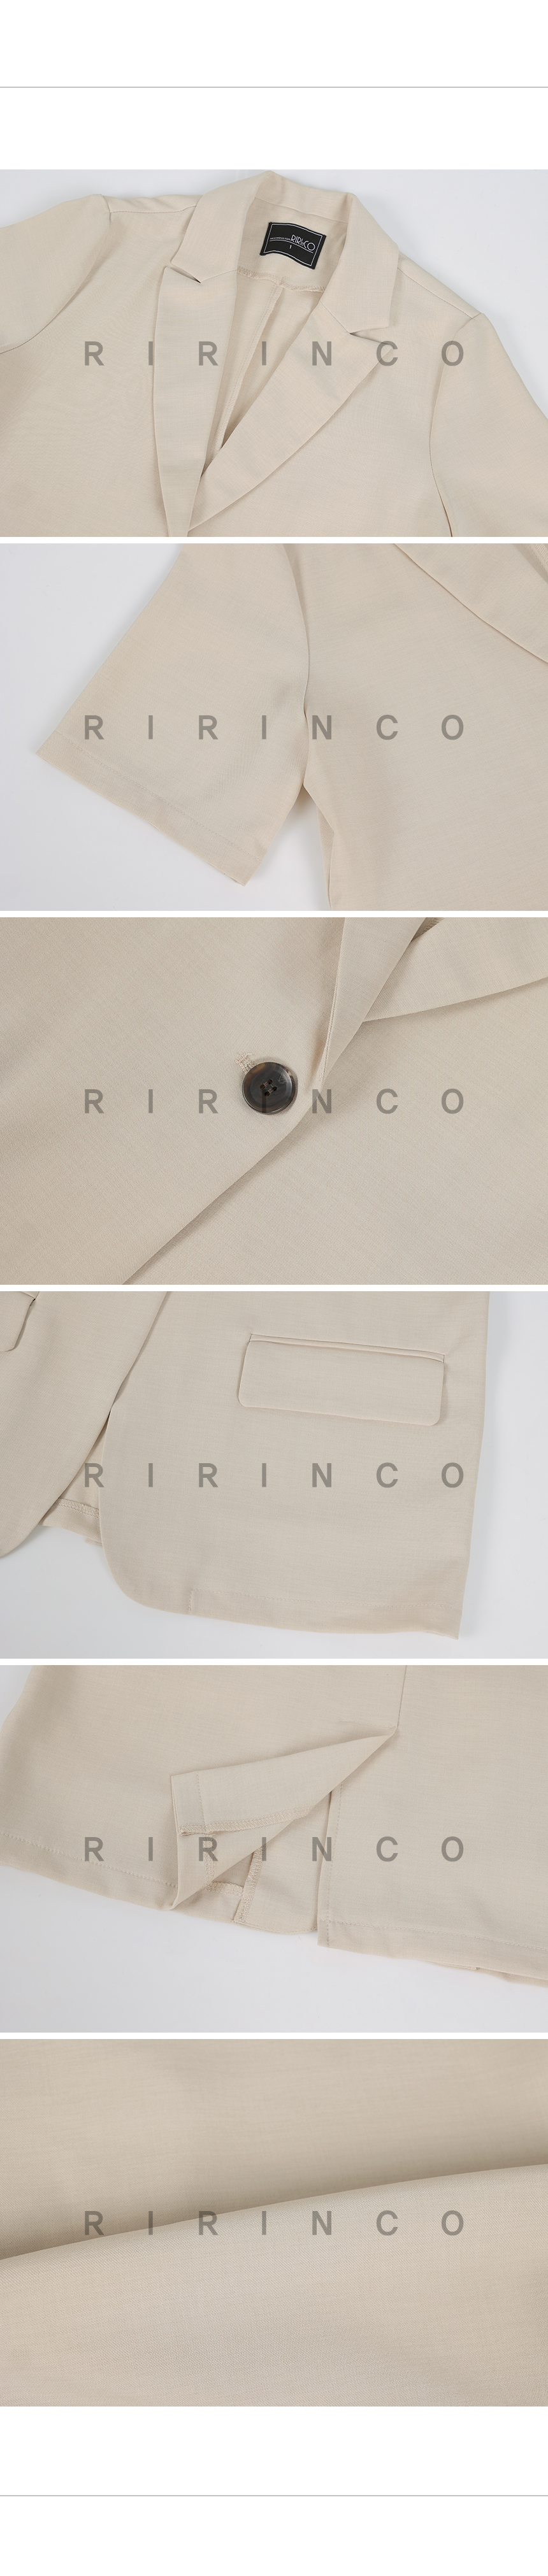 RIRINCO RIRINCO ベーシック半袖サマージャケット